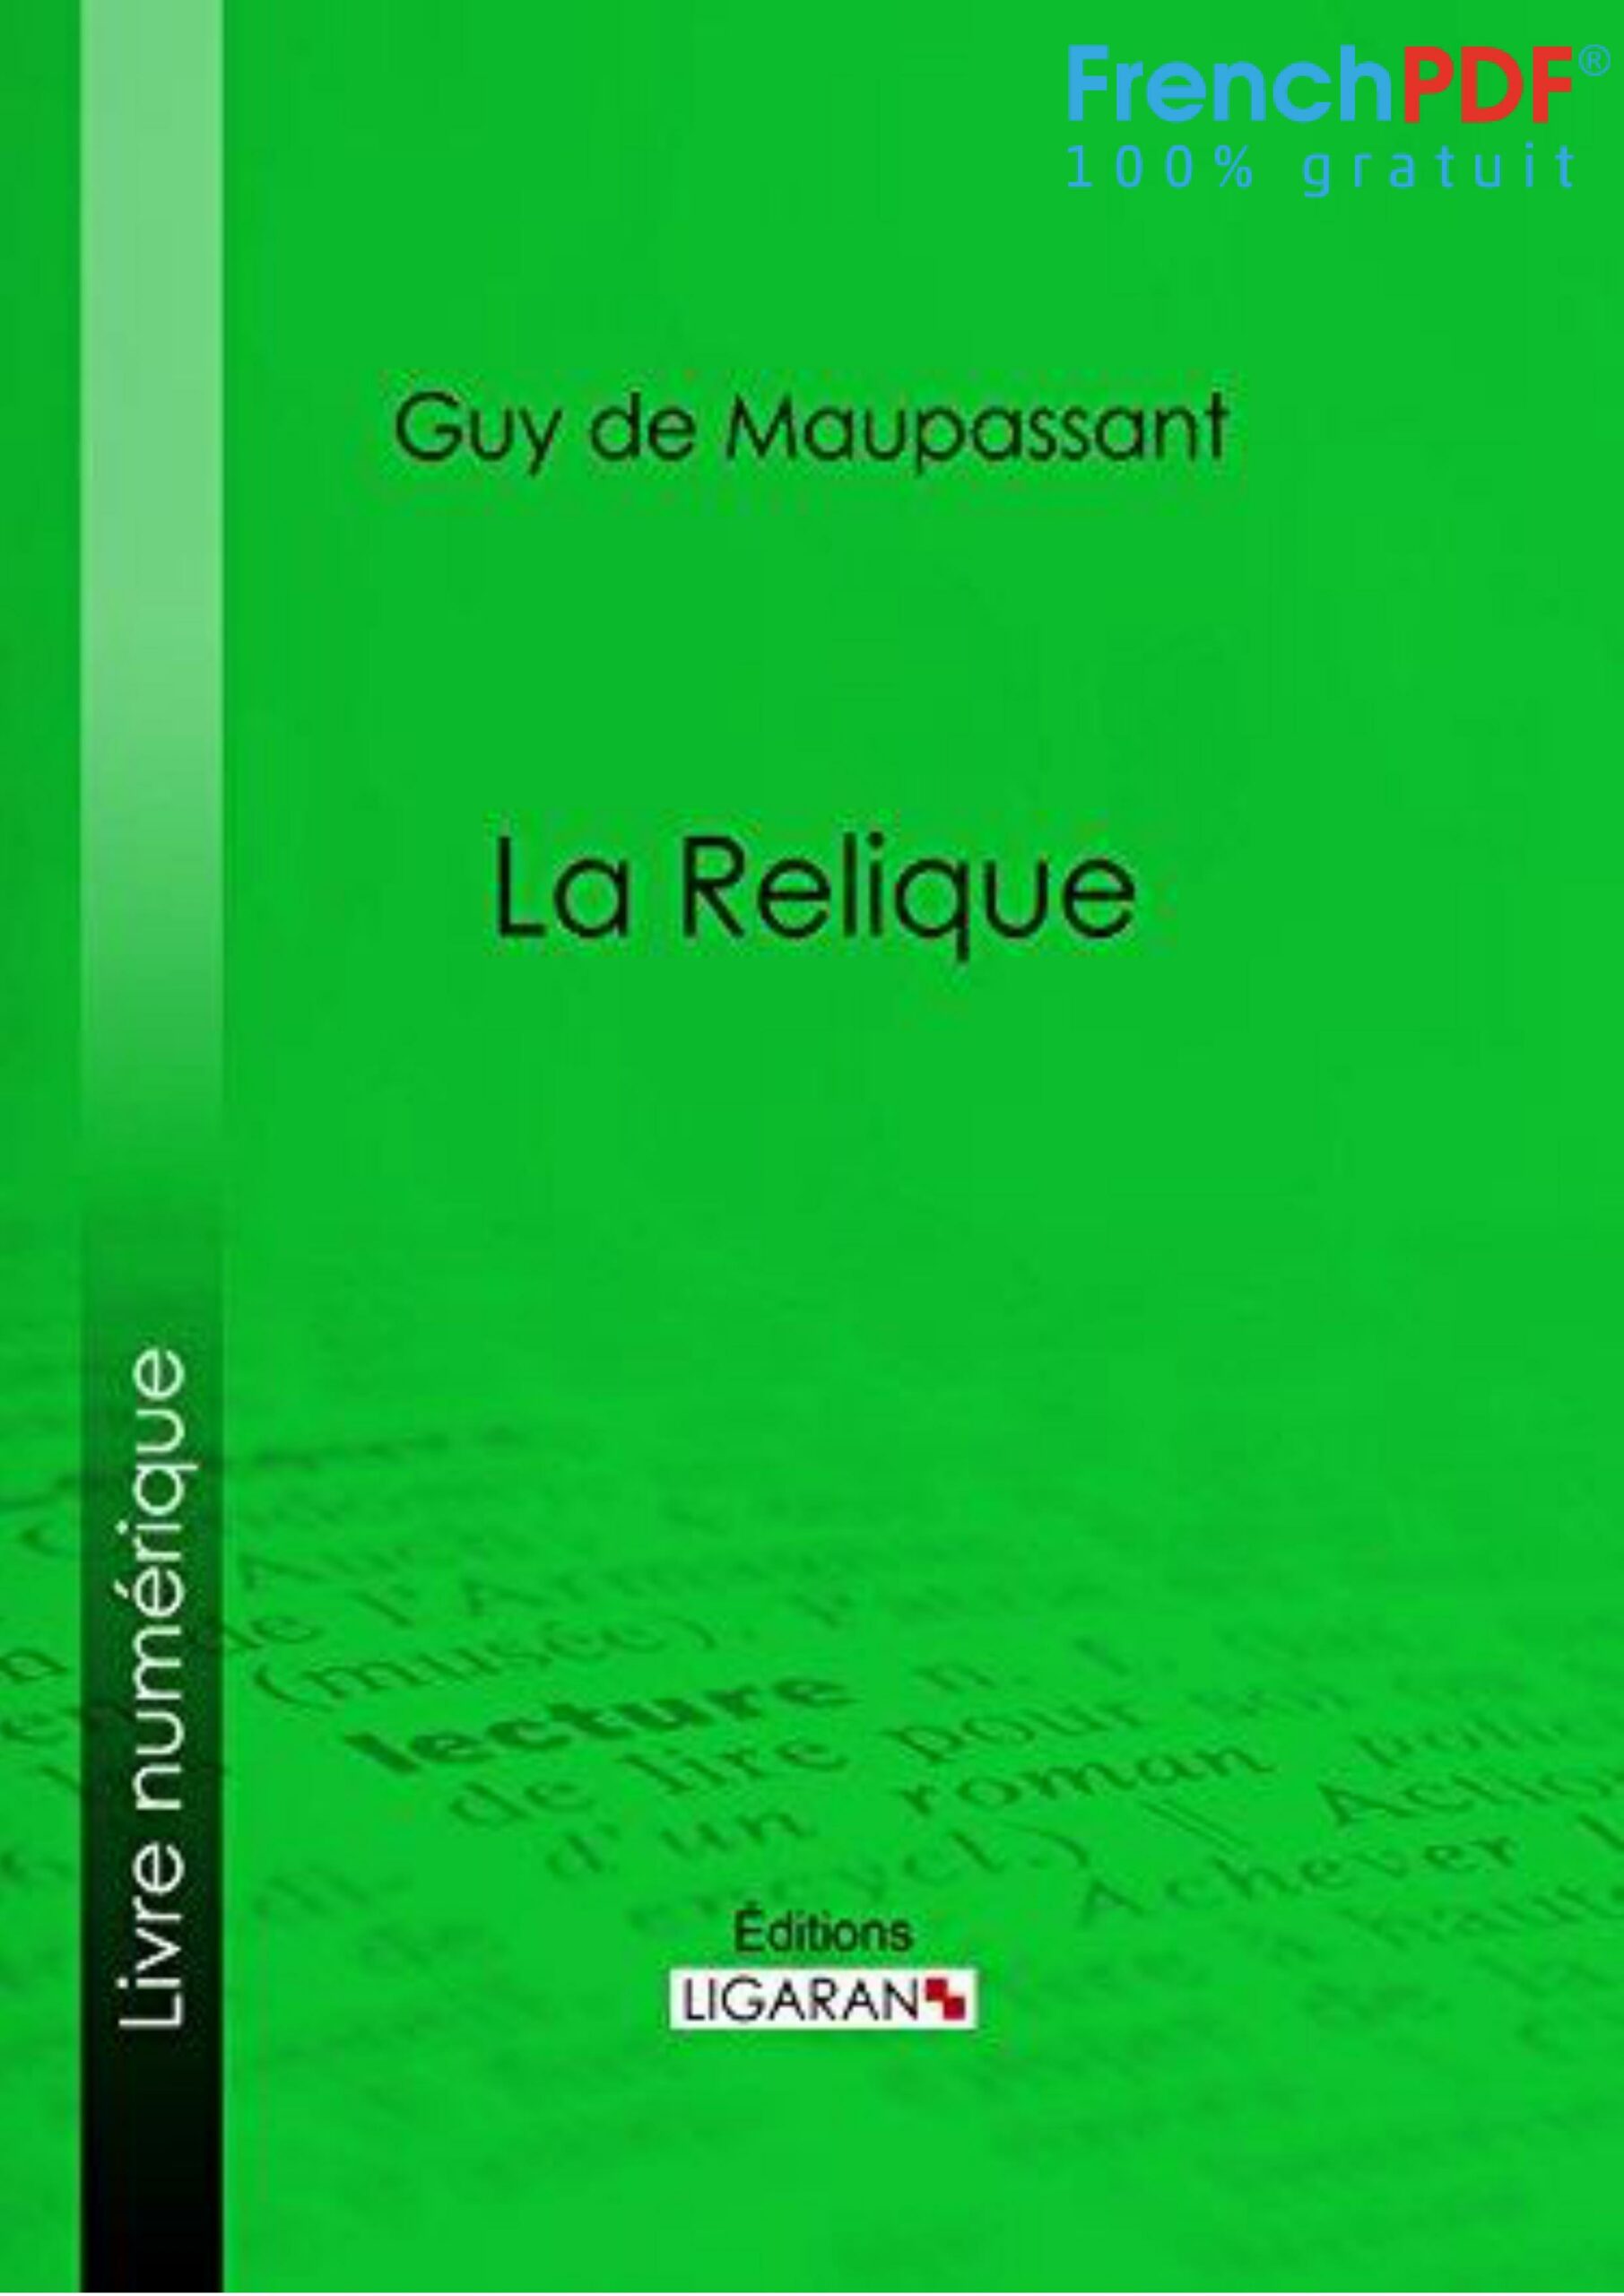 La Relique PDF - Maupassant - FrenchPDF.com